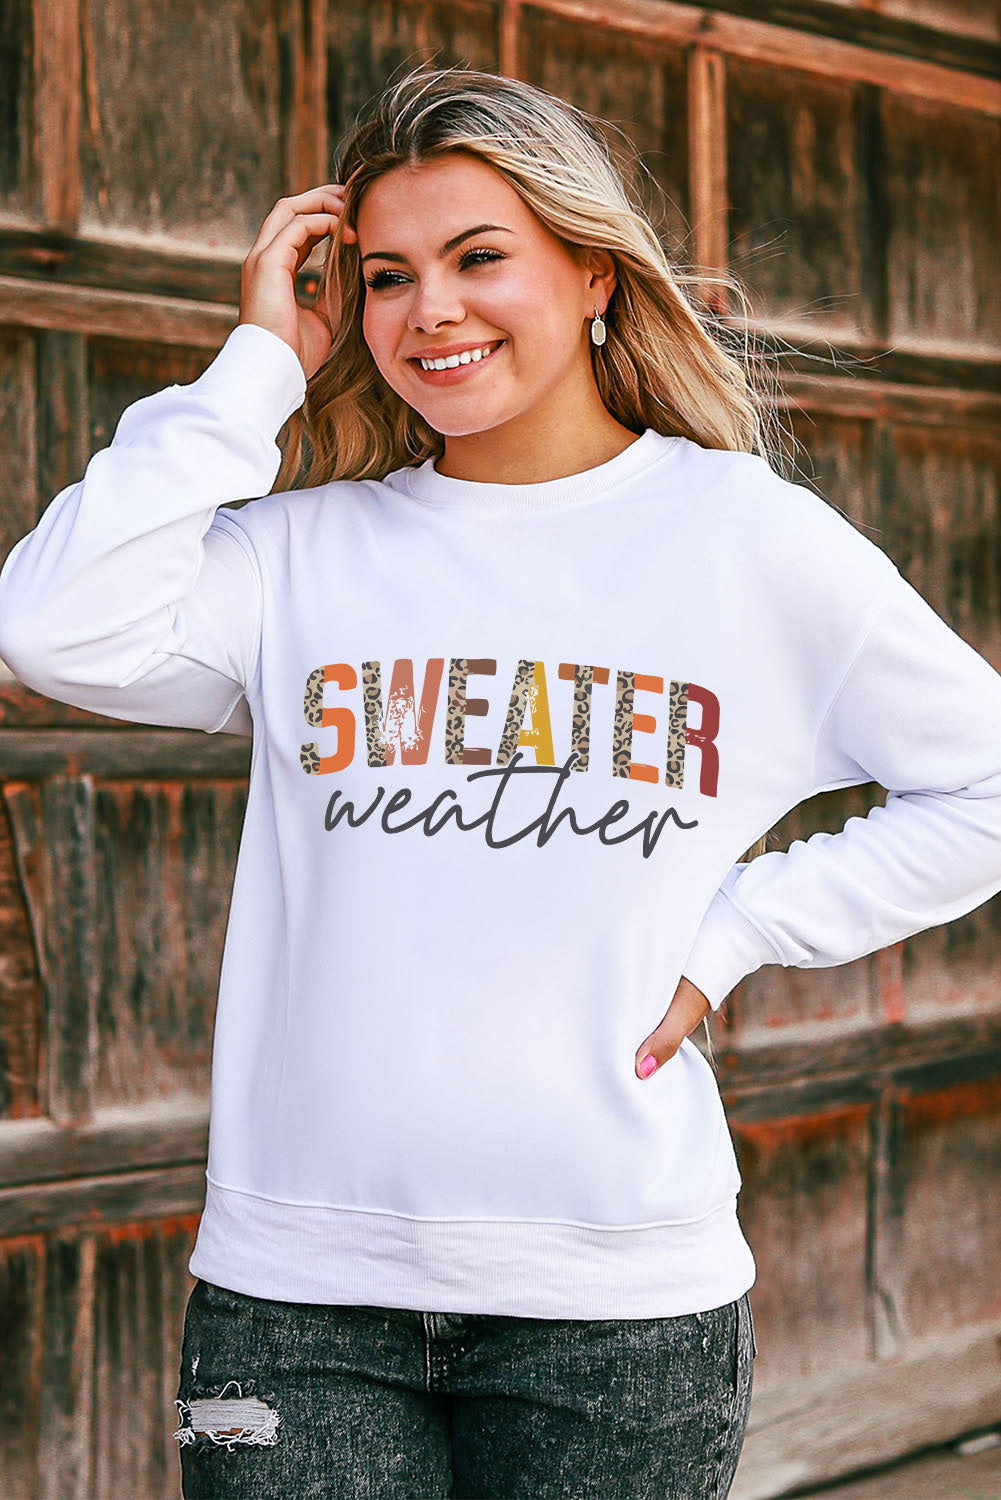 White Sweater Weather Vibrant Monogram Letter Print Sweatshirt